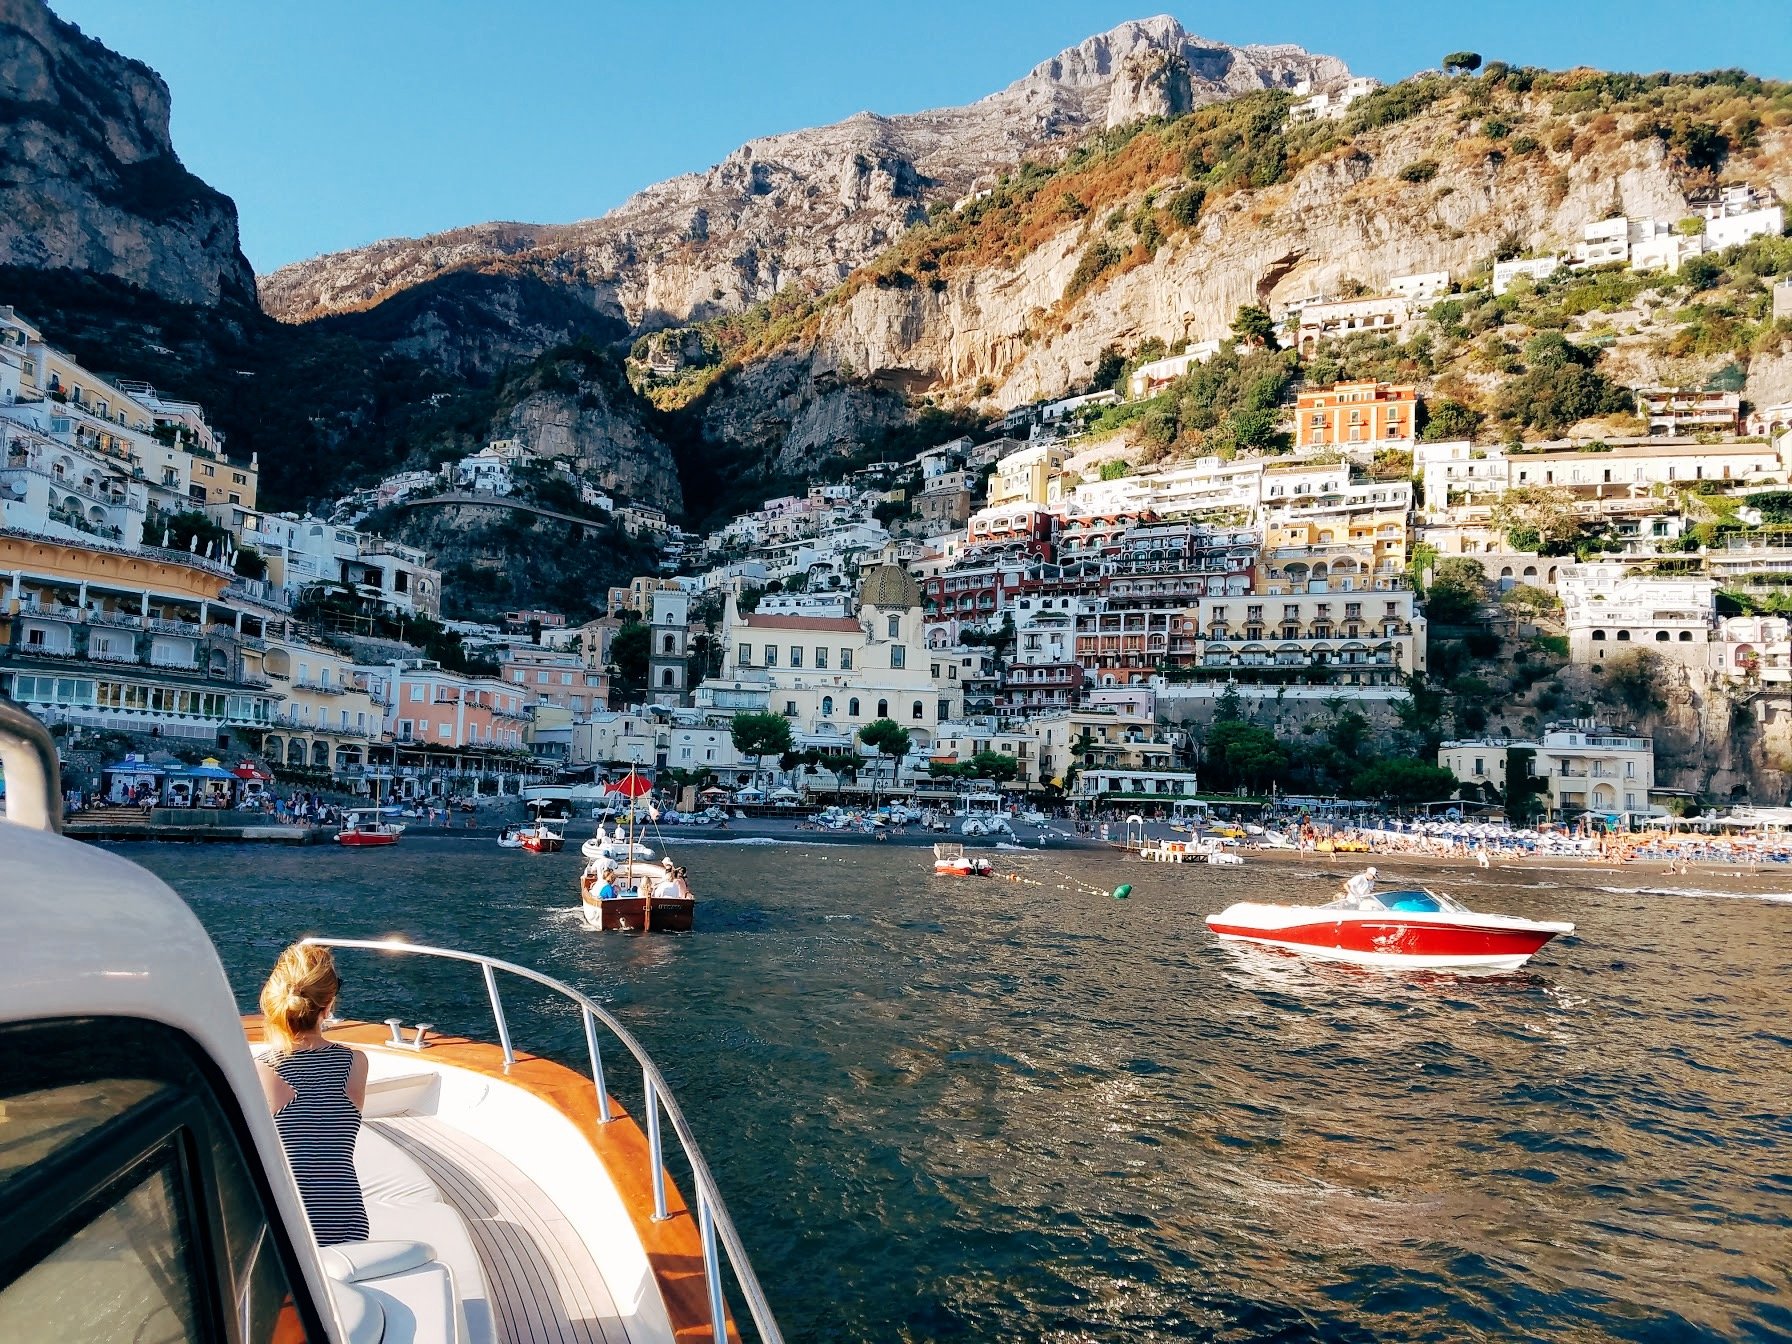 Boat view of the Amalfi Coast